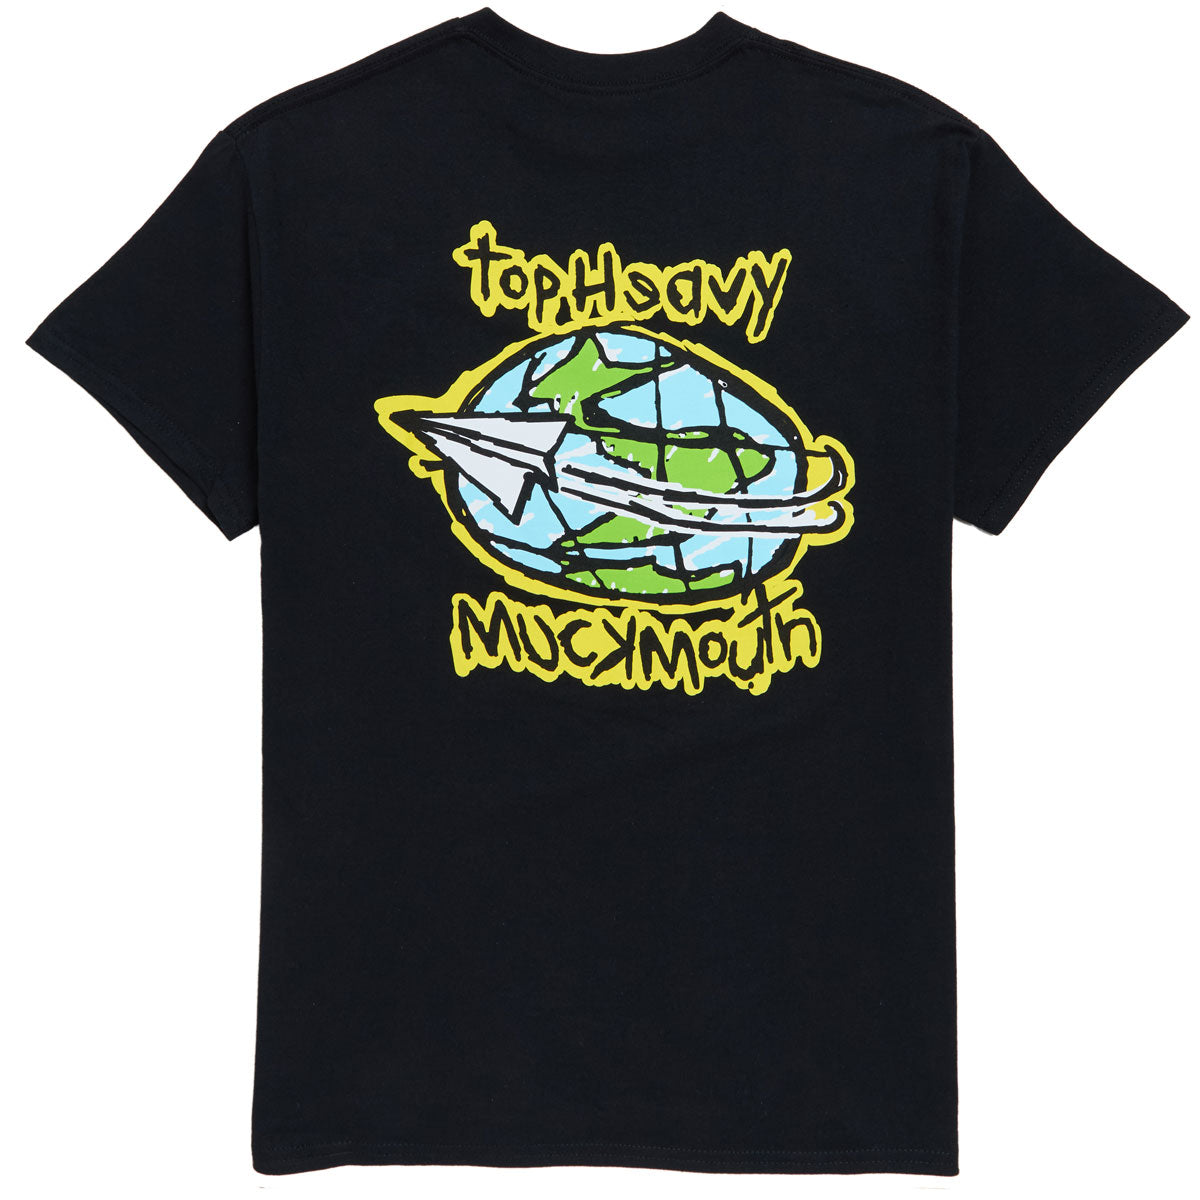 Top Heavy x Muckmouth T-Shirt - Black image 1